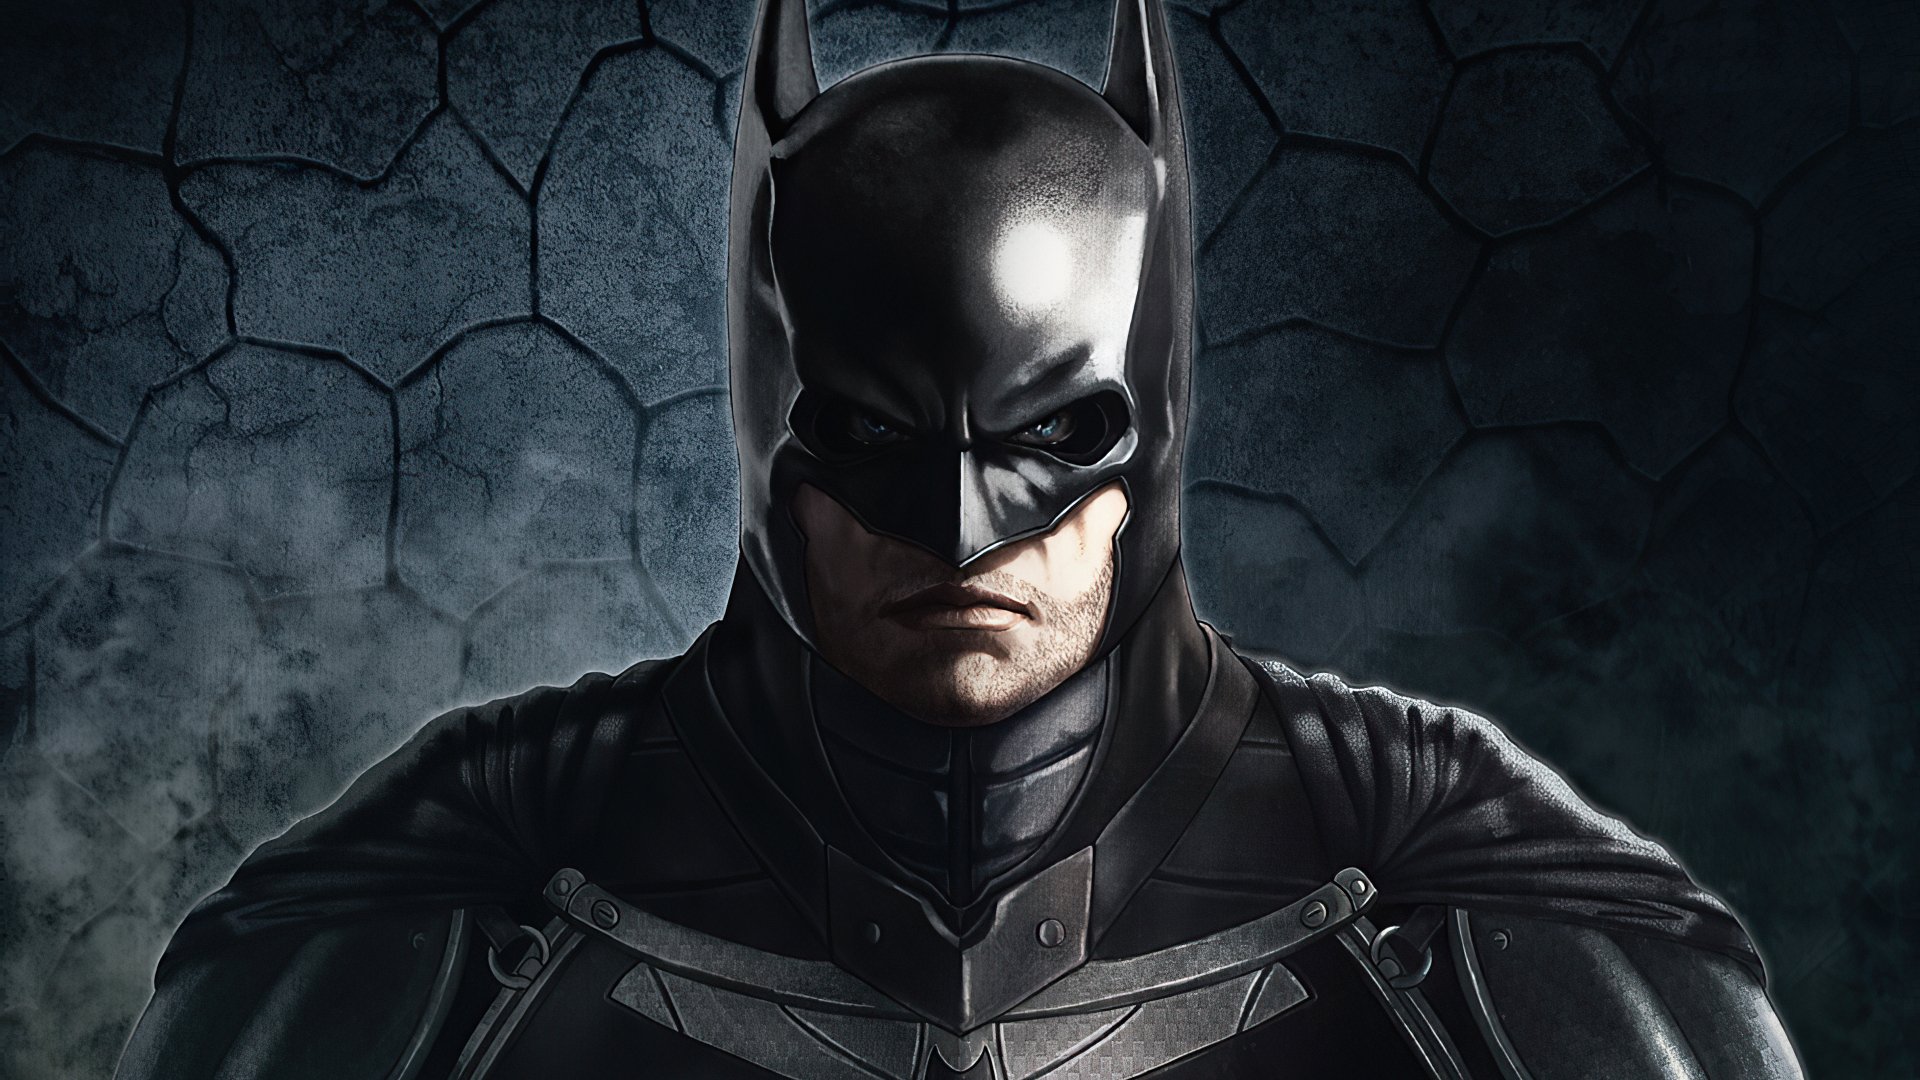 Batman 4k Ultra HD Wallpaper | Background Image | 3840x2160 | ID:1103341 - Wallpaper Abyss